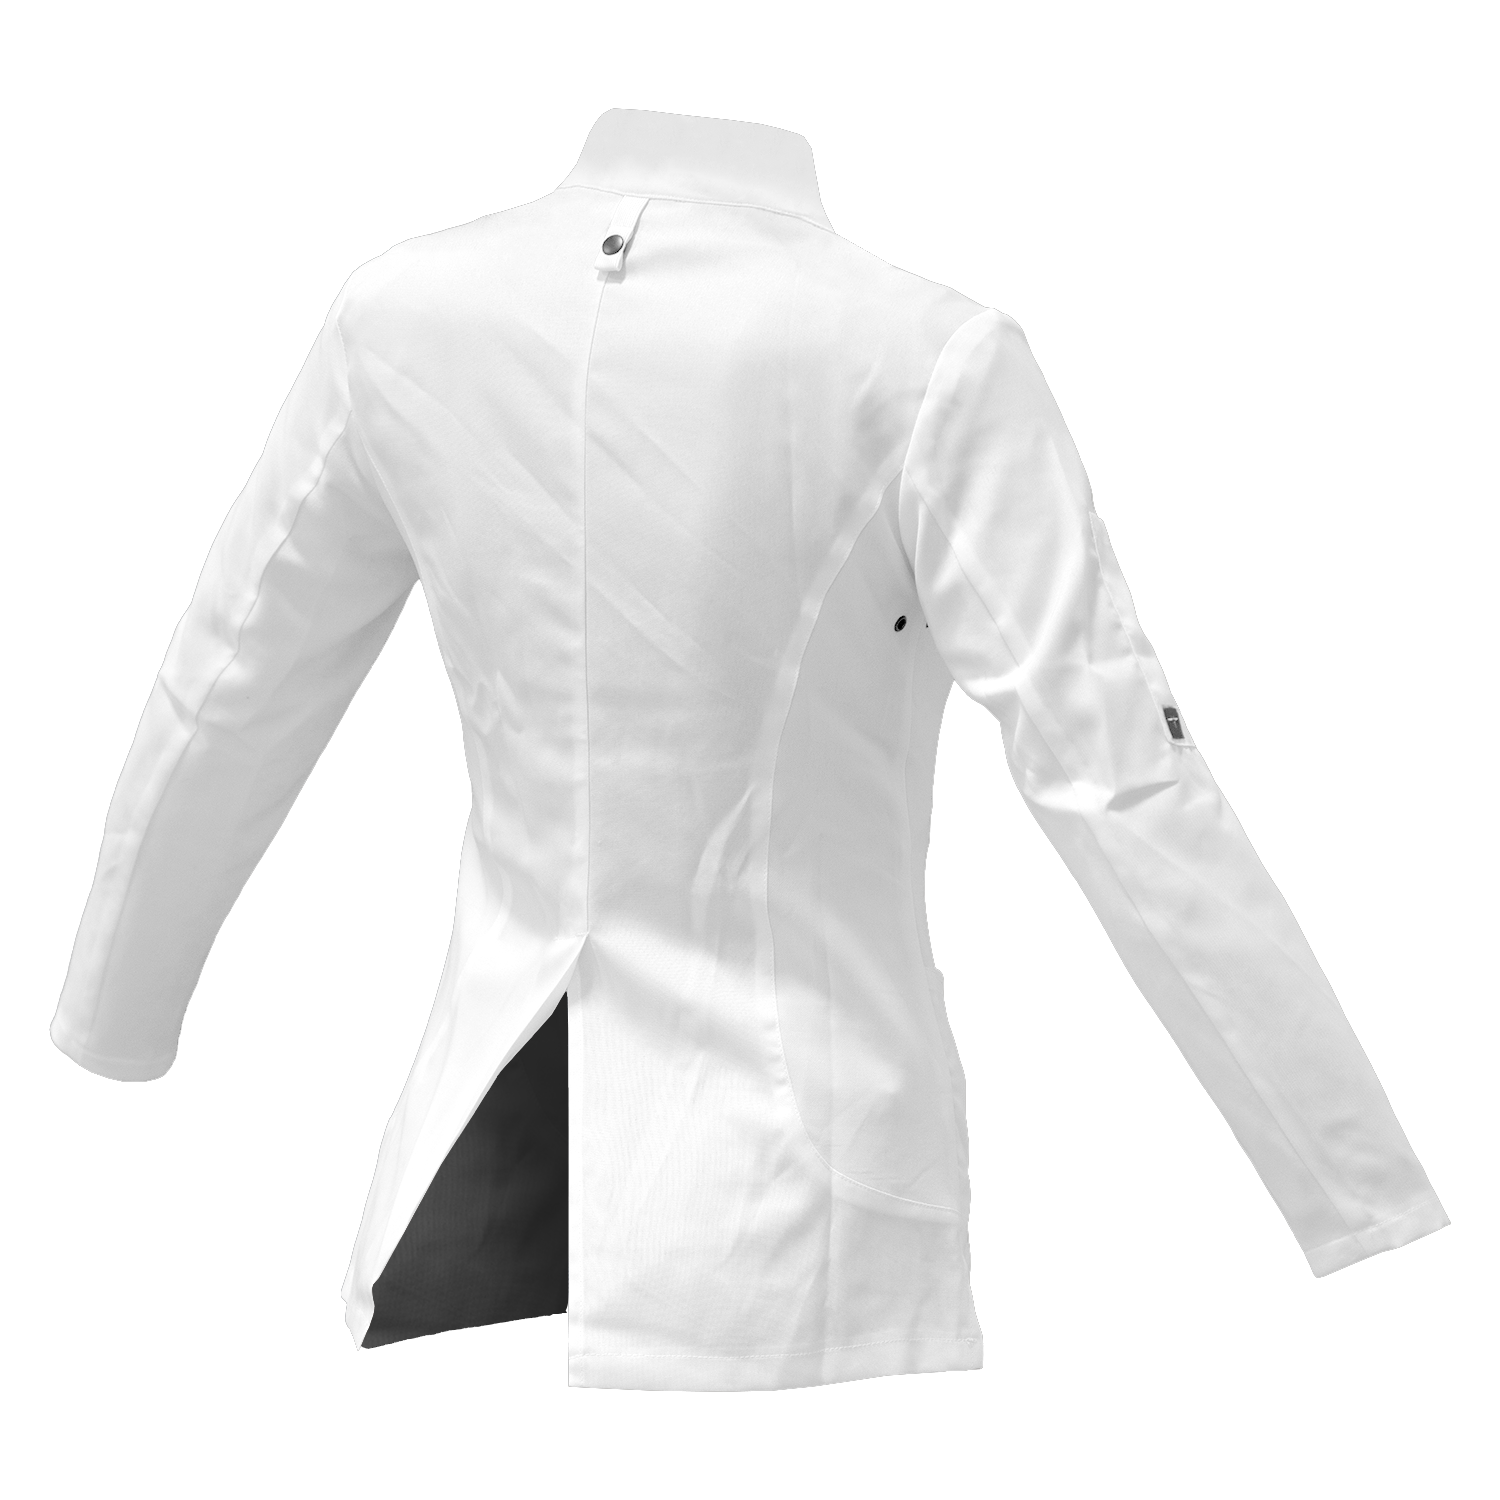 YellowJacket Chefwear Womens Chefwear White Long Sleeve Coat Jacket Ladies Female Chef Wear Uniform